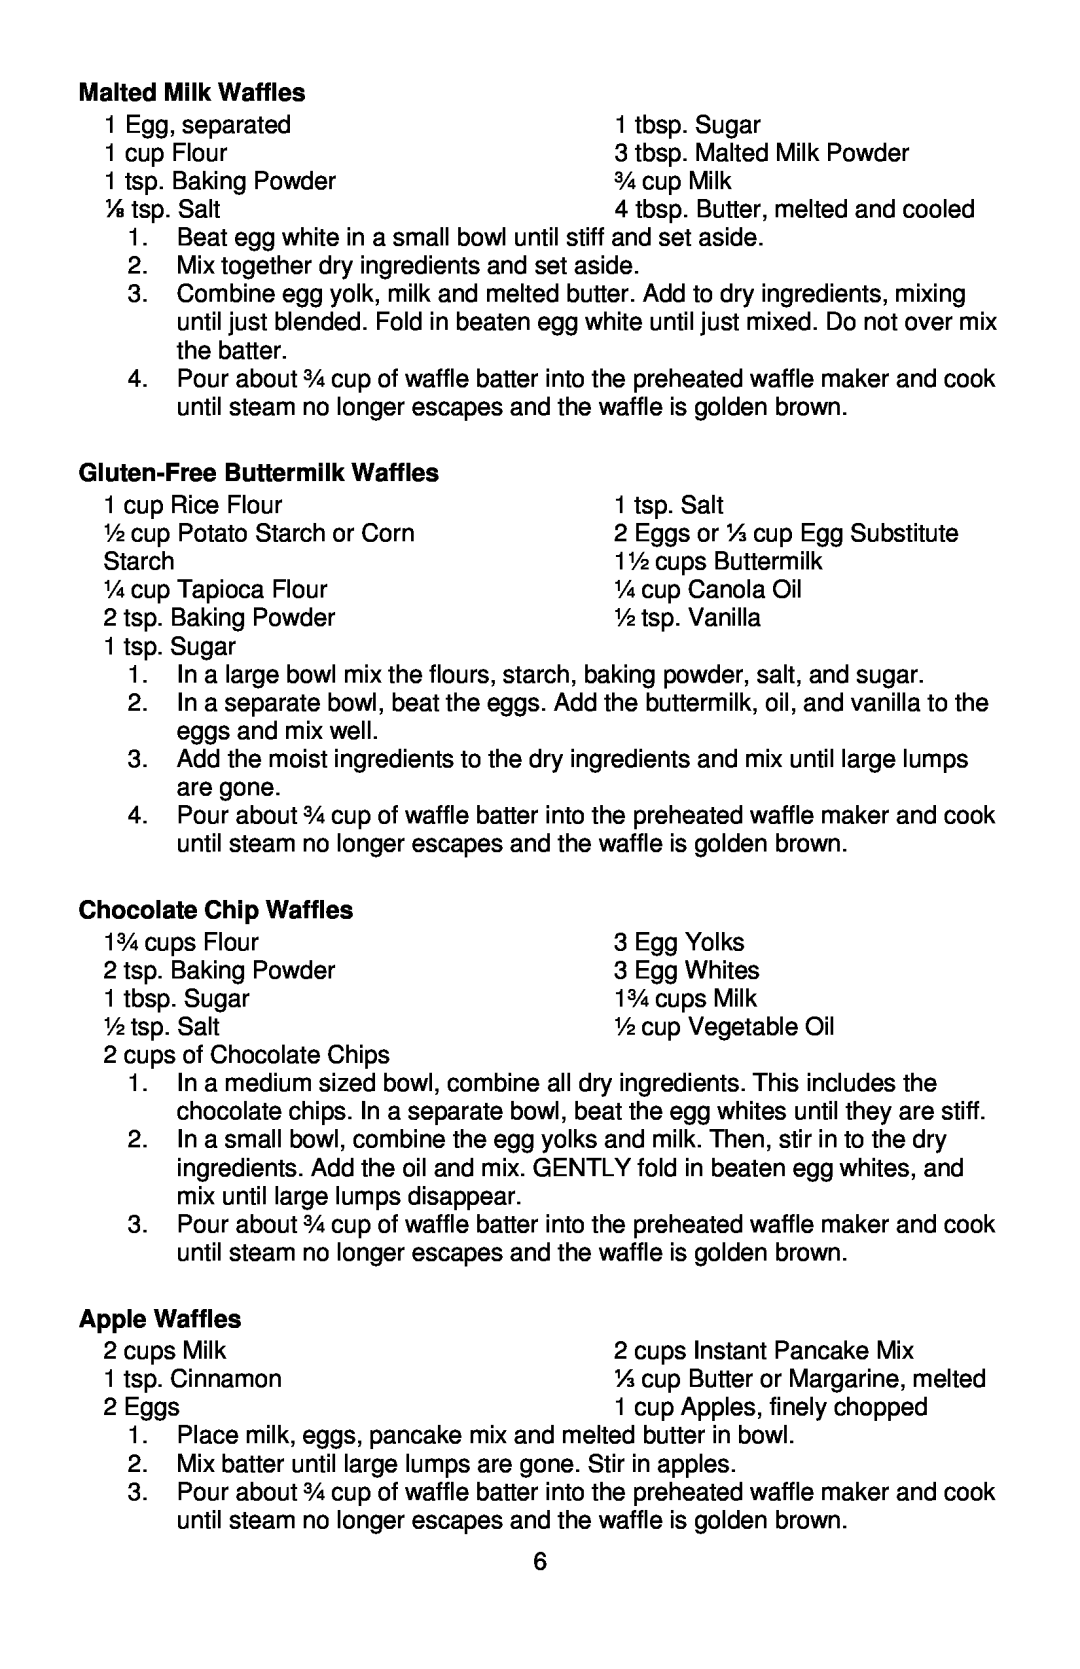 West Bend 6201 instruction manual Malted Milk Waffles, Gluten-FreeButtermilk Waffles, Chocolate Chip Waffles, Apple Waffles 